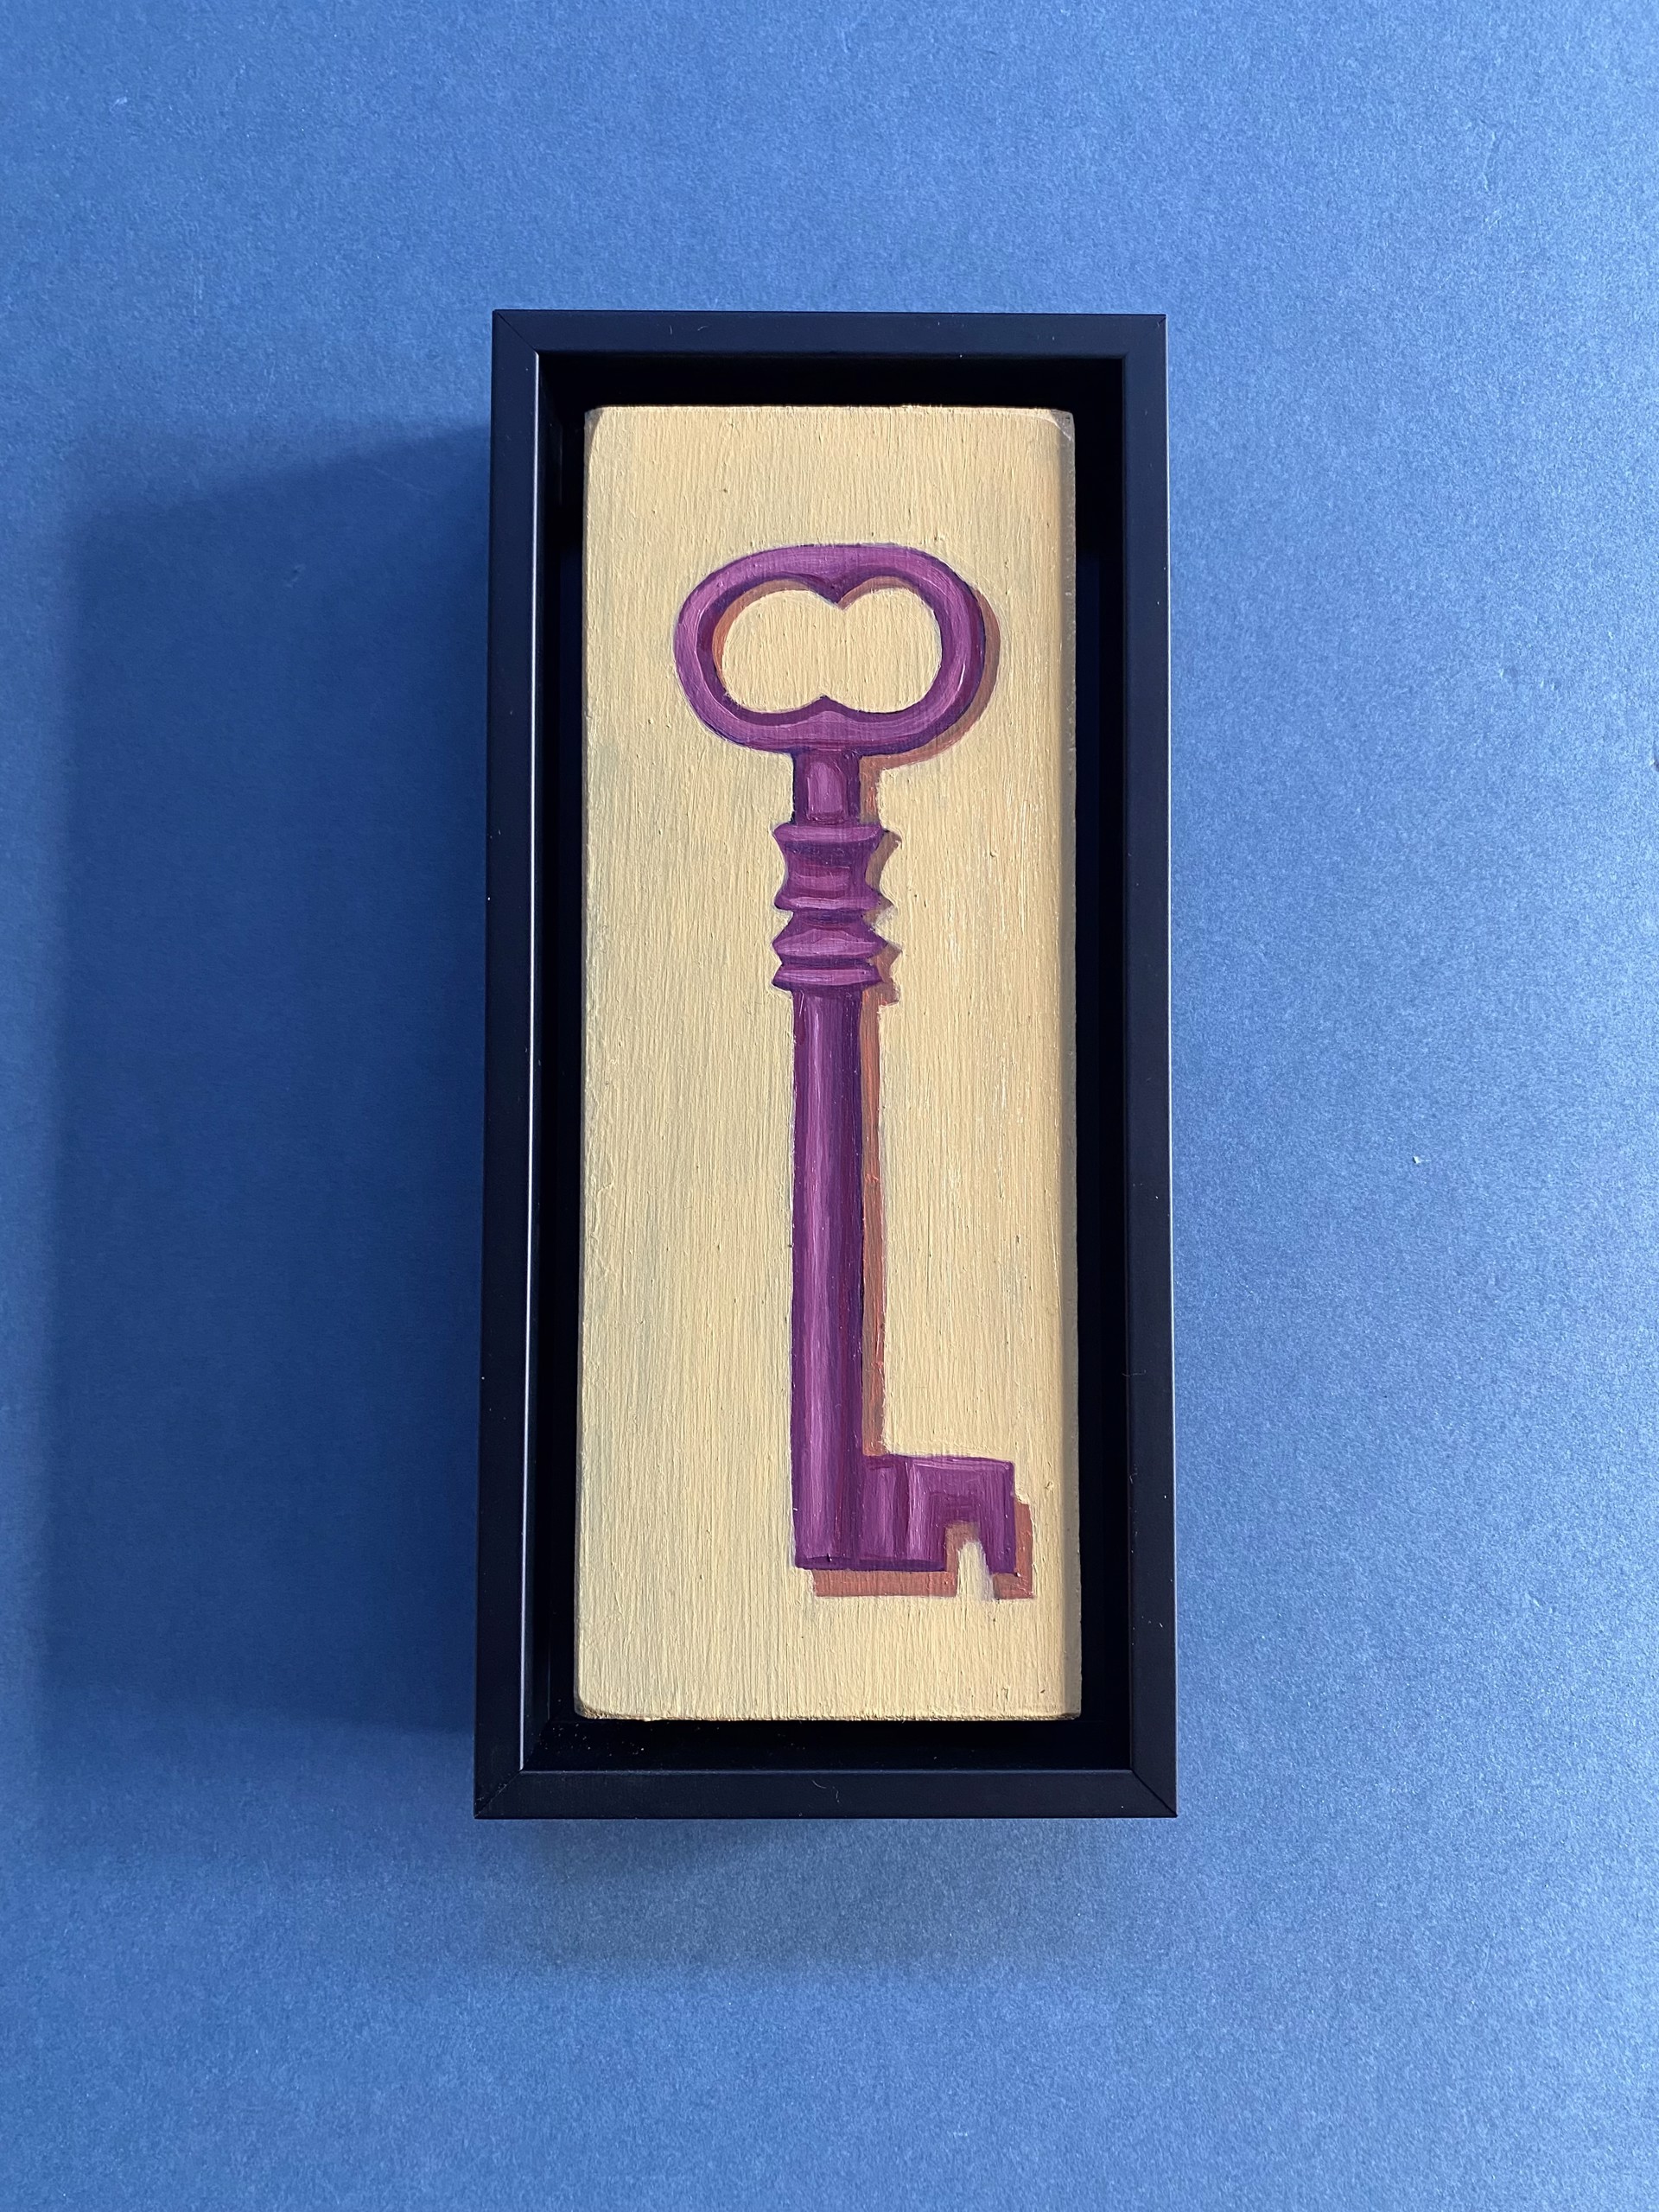 Key No. 61 by Stephen Wells